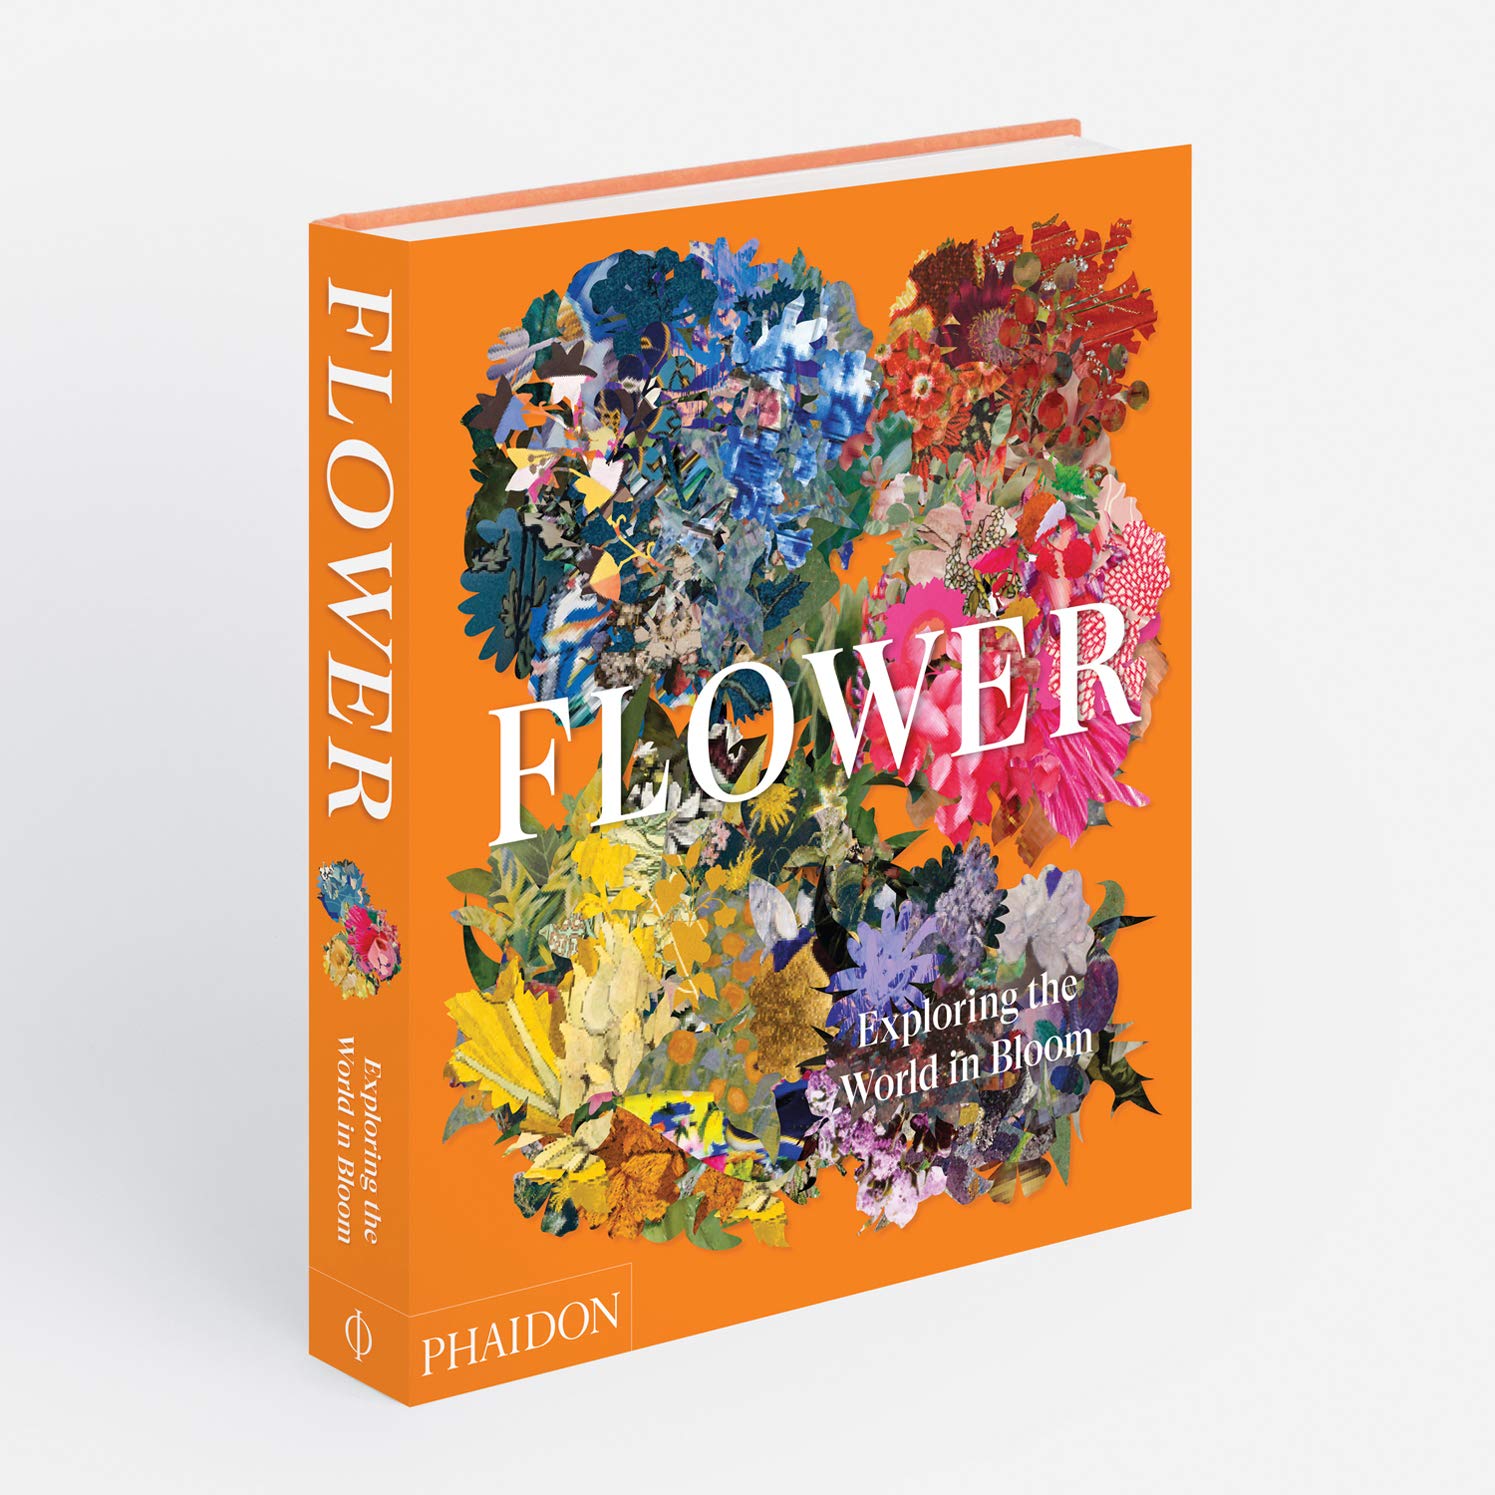 Flower, exploring the world in bloom de Phaidon